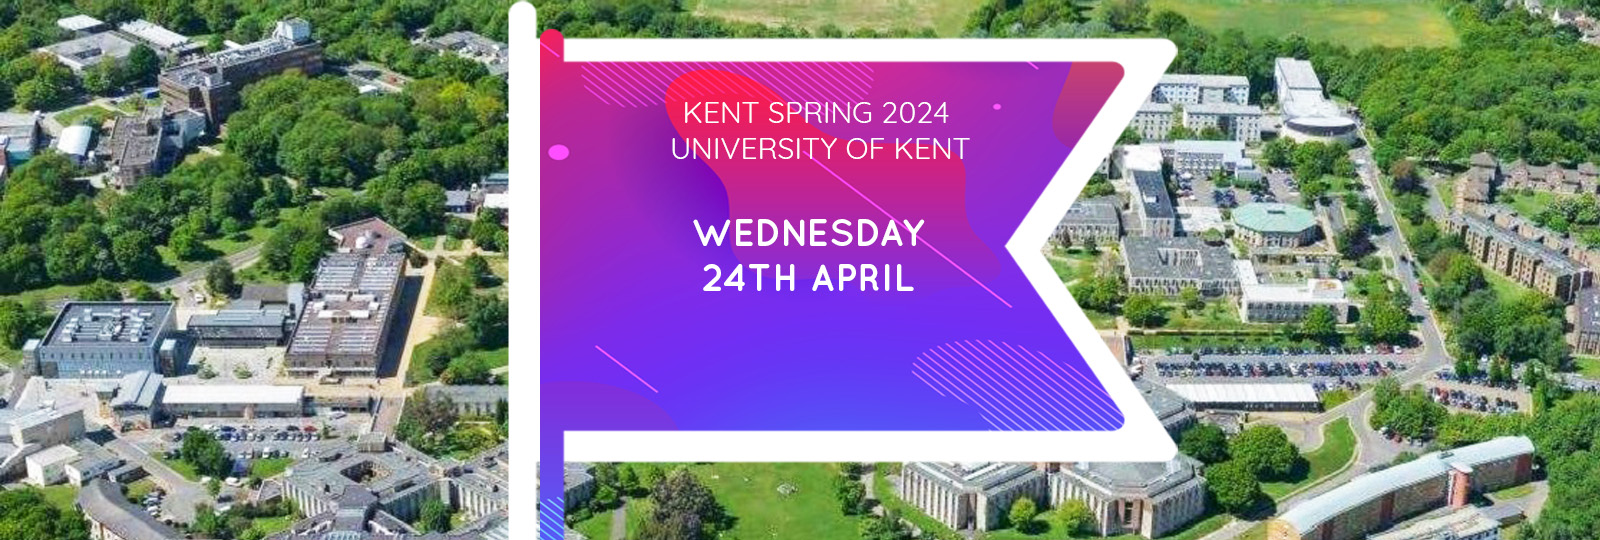 University of Kent Spring 2024 Fair